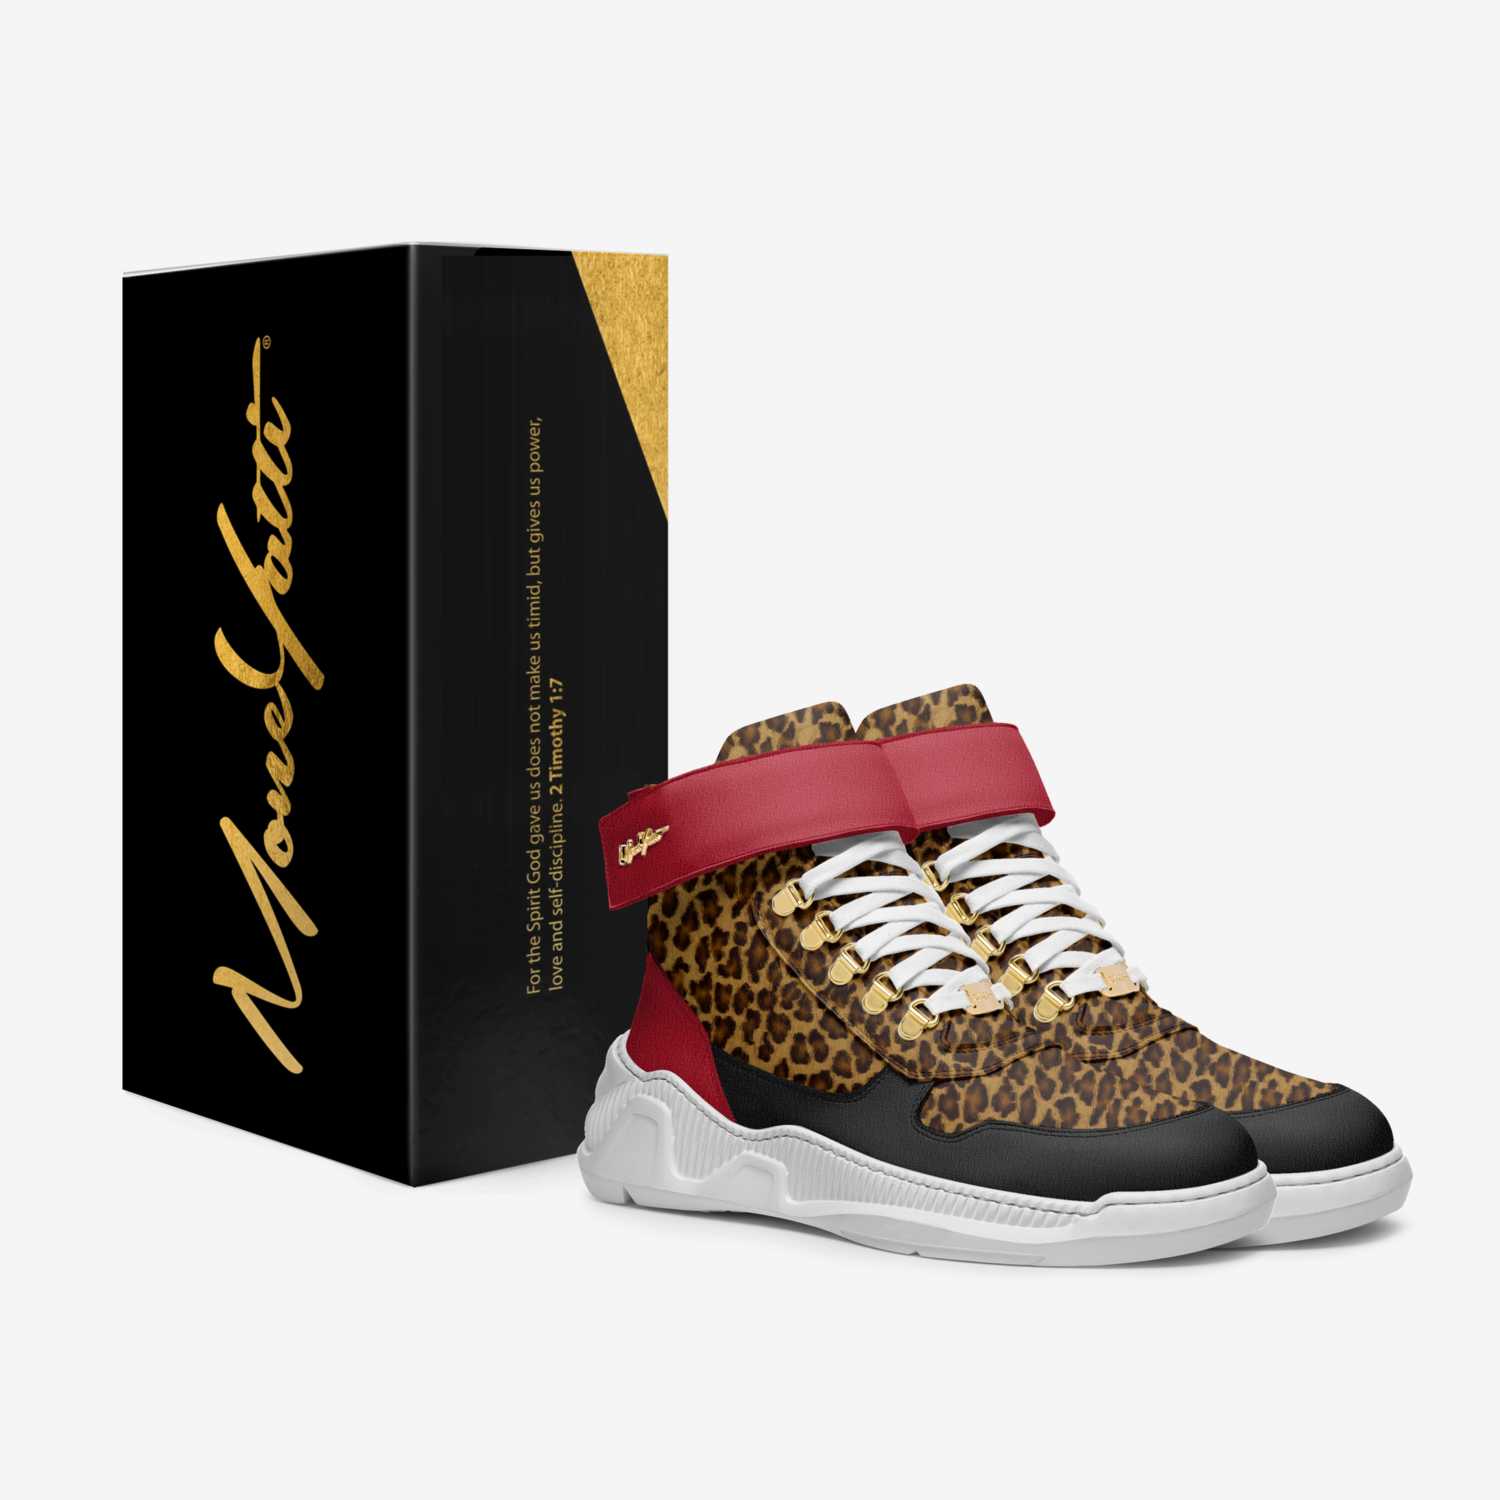 Moneyatti Traps03 custom made in Italy shoes by Moneyatti Brand | Box view